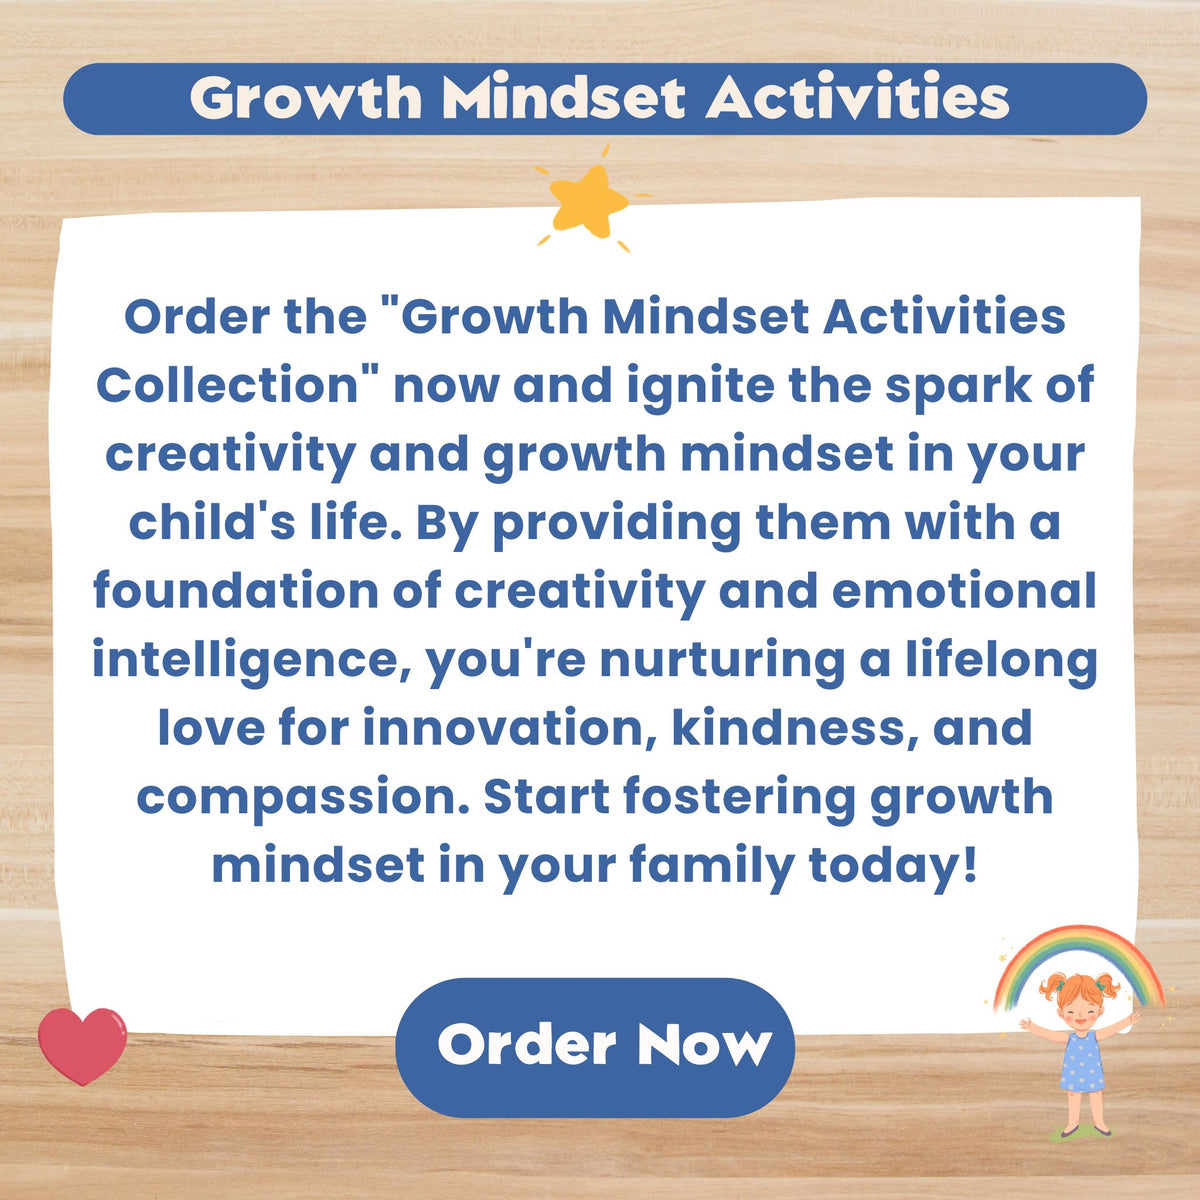 Growth Mindset Activities (PDF)